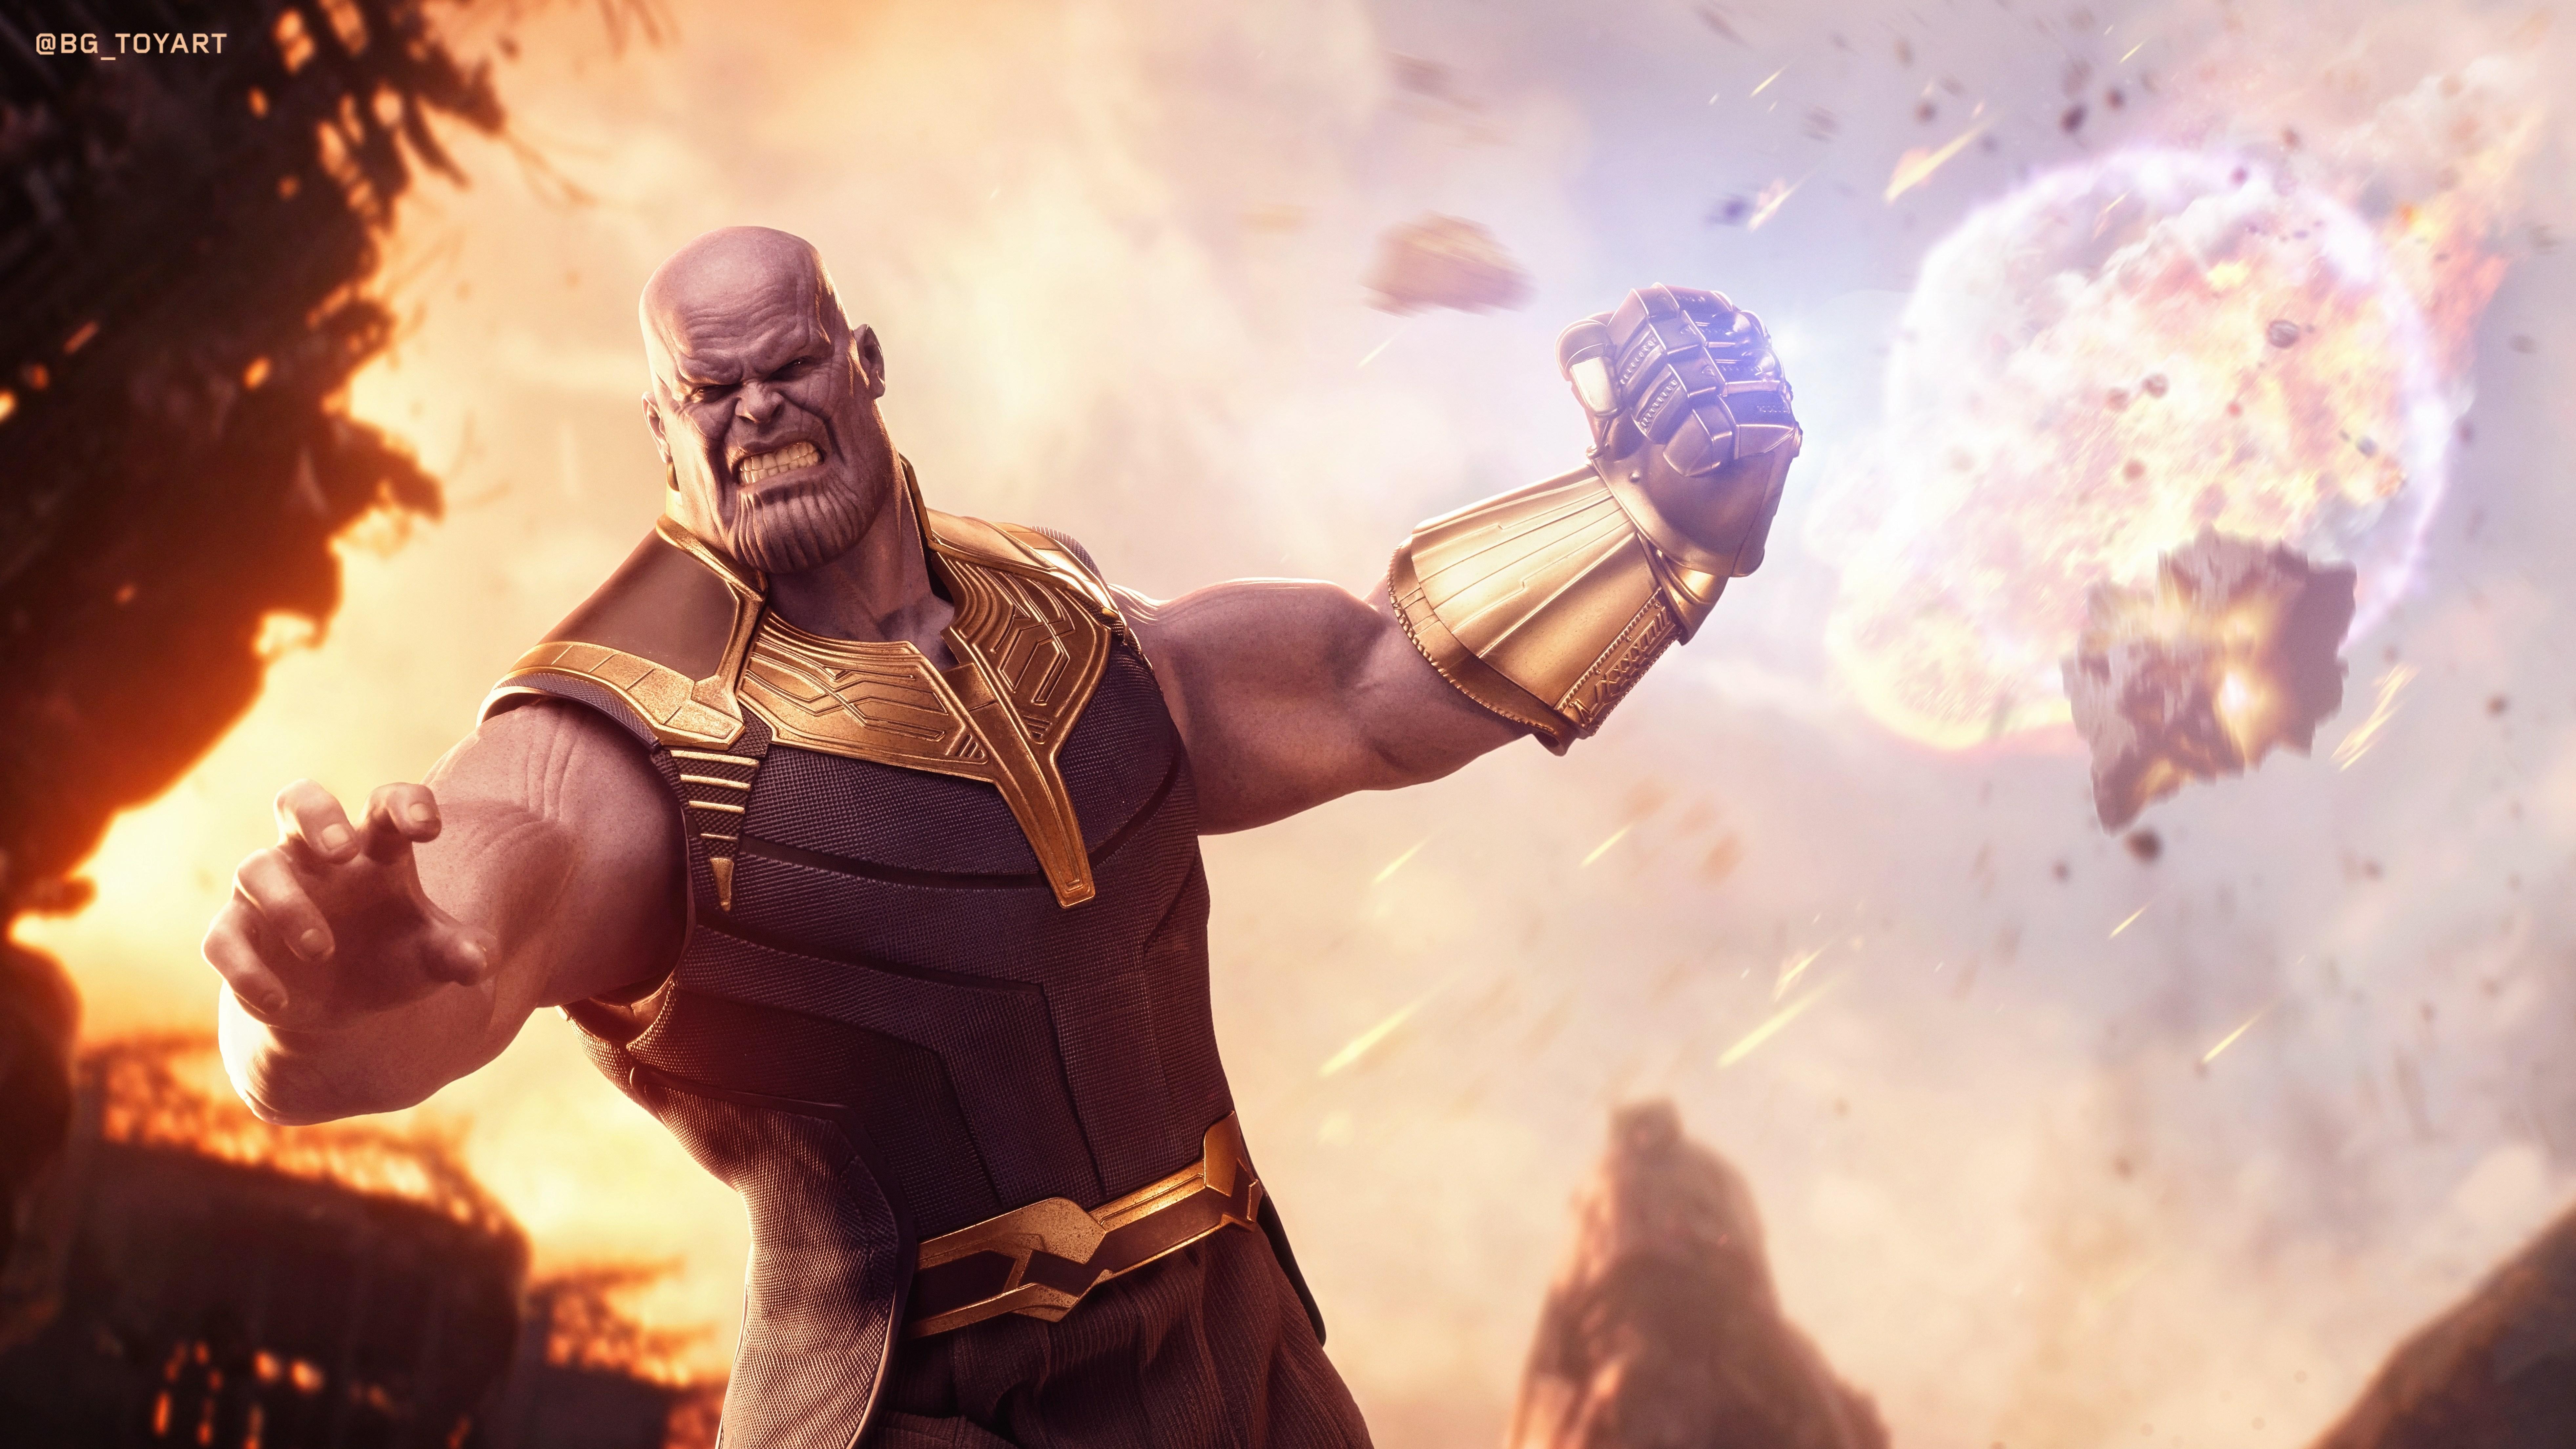 Movie Avengers Infinity War 8k Ultra HD Wallpaper By Alex Brooks